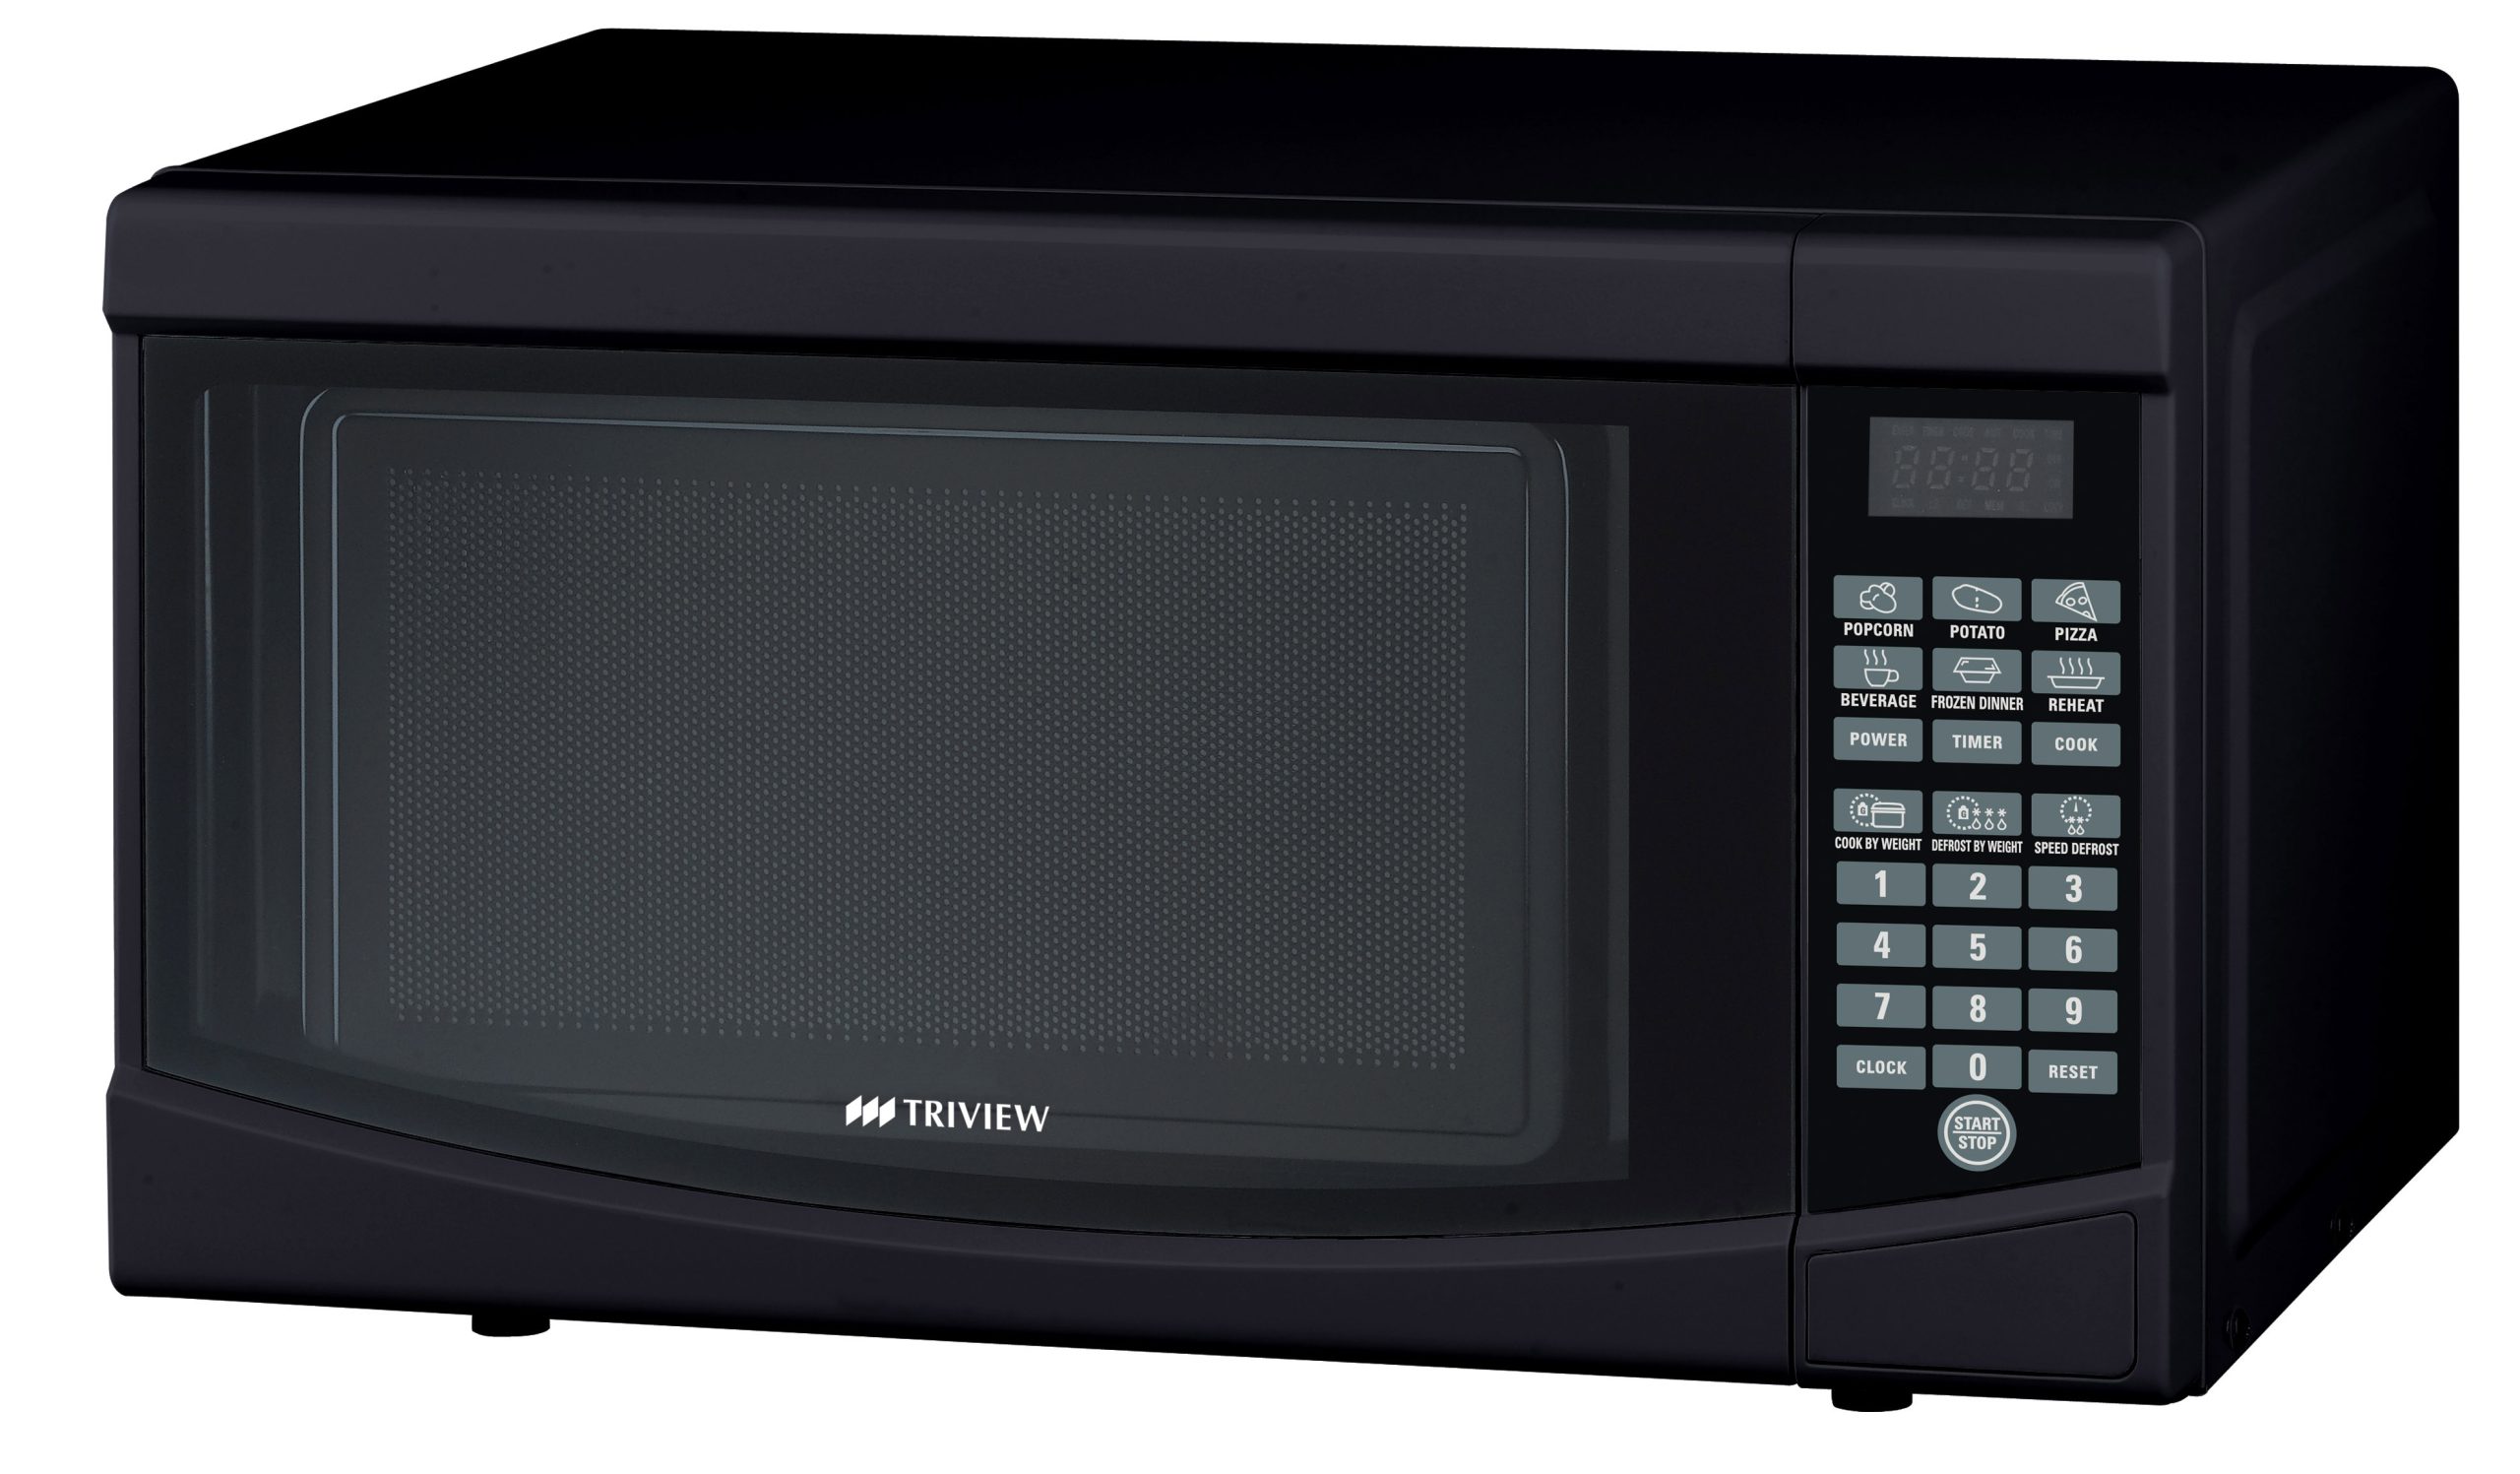 Tatung Microwave,0.7 cu. Ft. Microwave Oven with Dual Plug